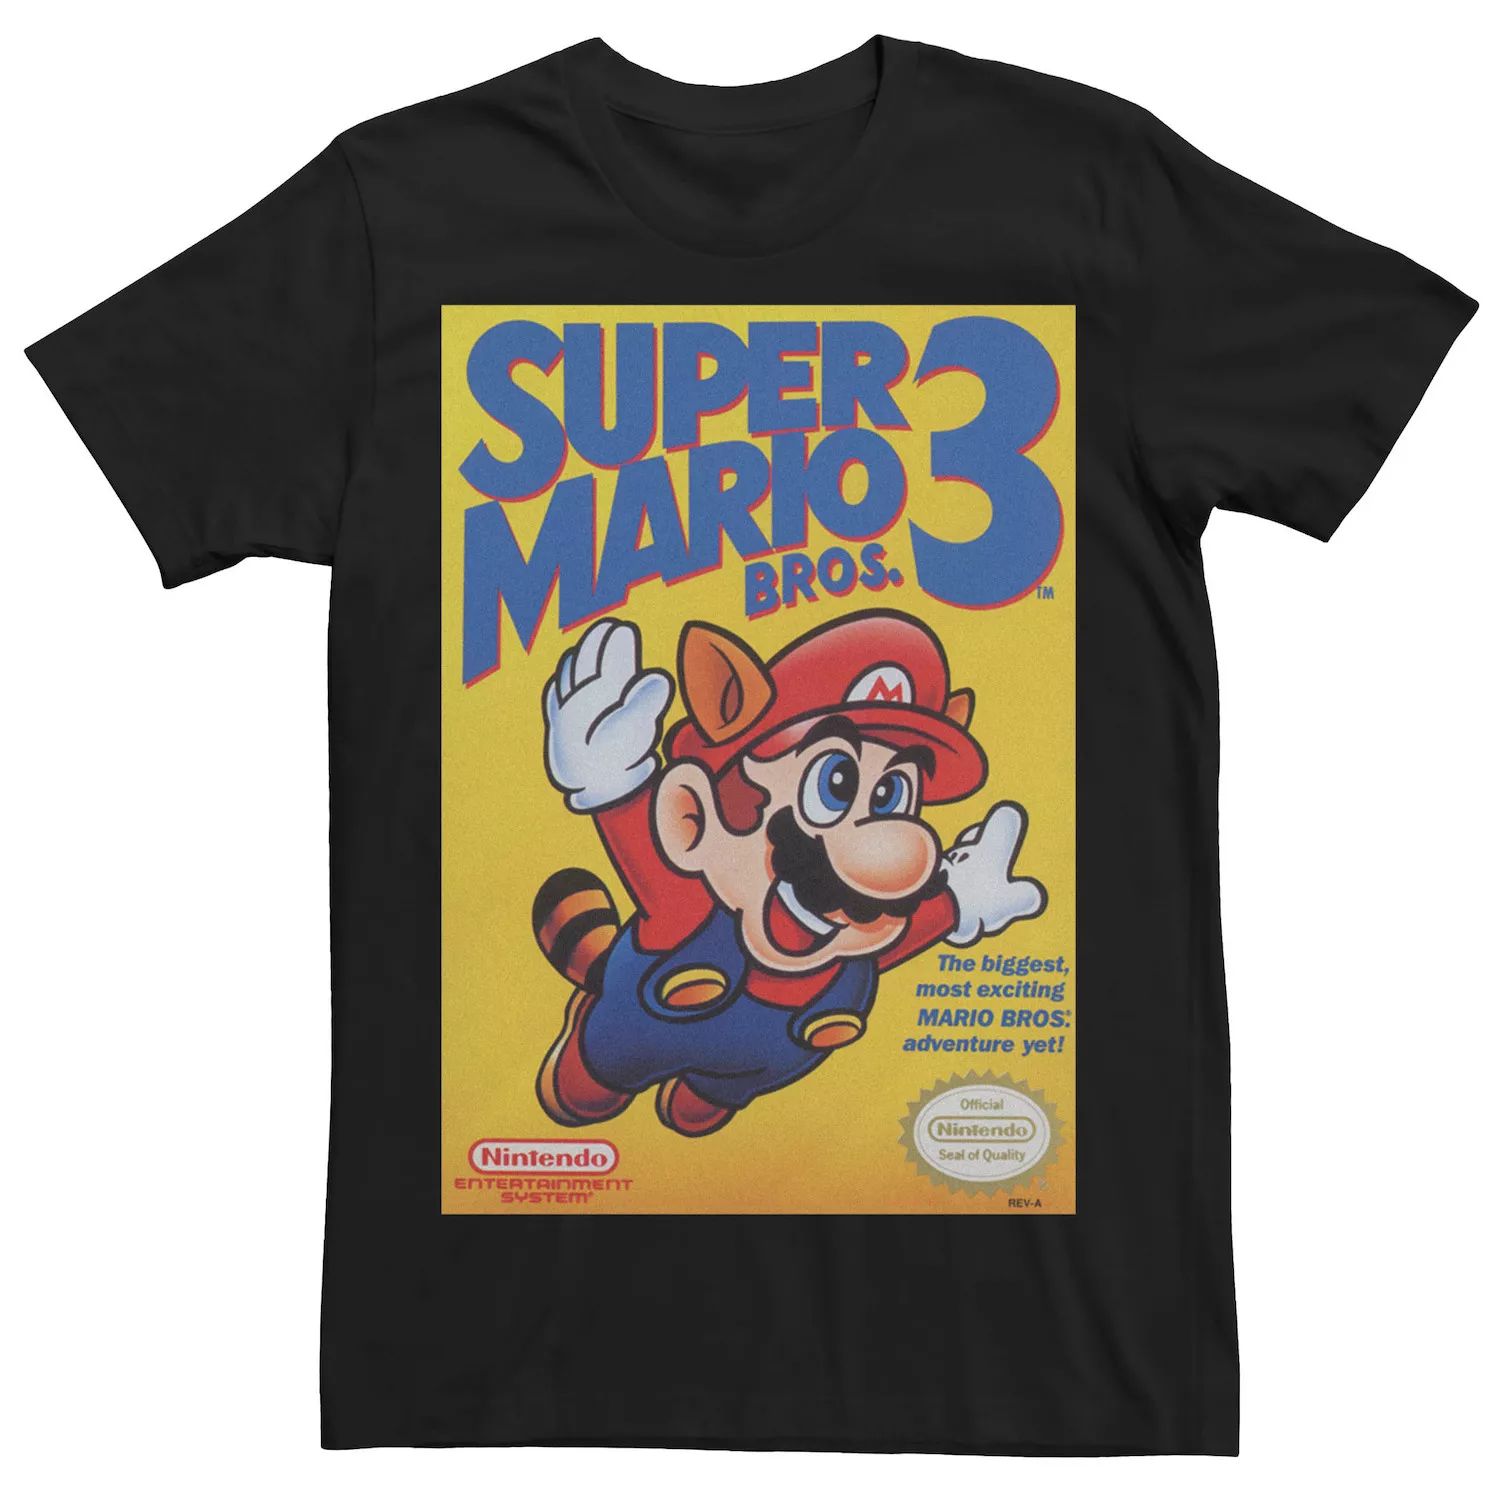 Мужская футболка с плакатом Super Mario Bros 3 Flying Raccoon Mario, Black Licensed Character, черный